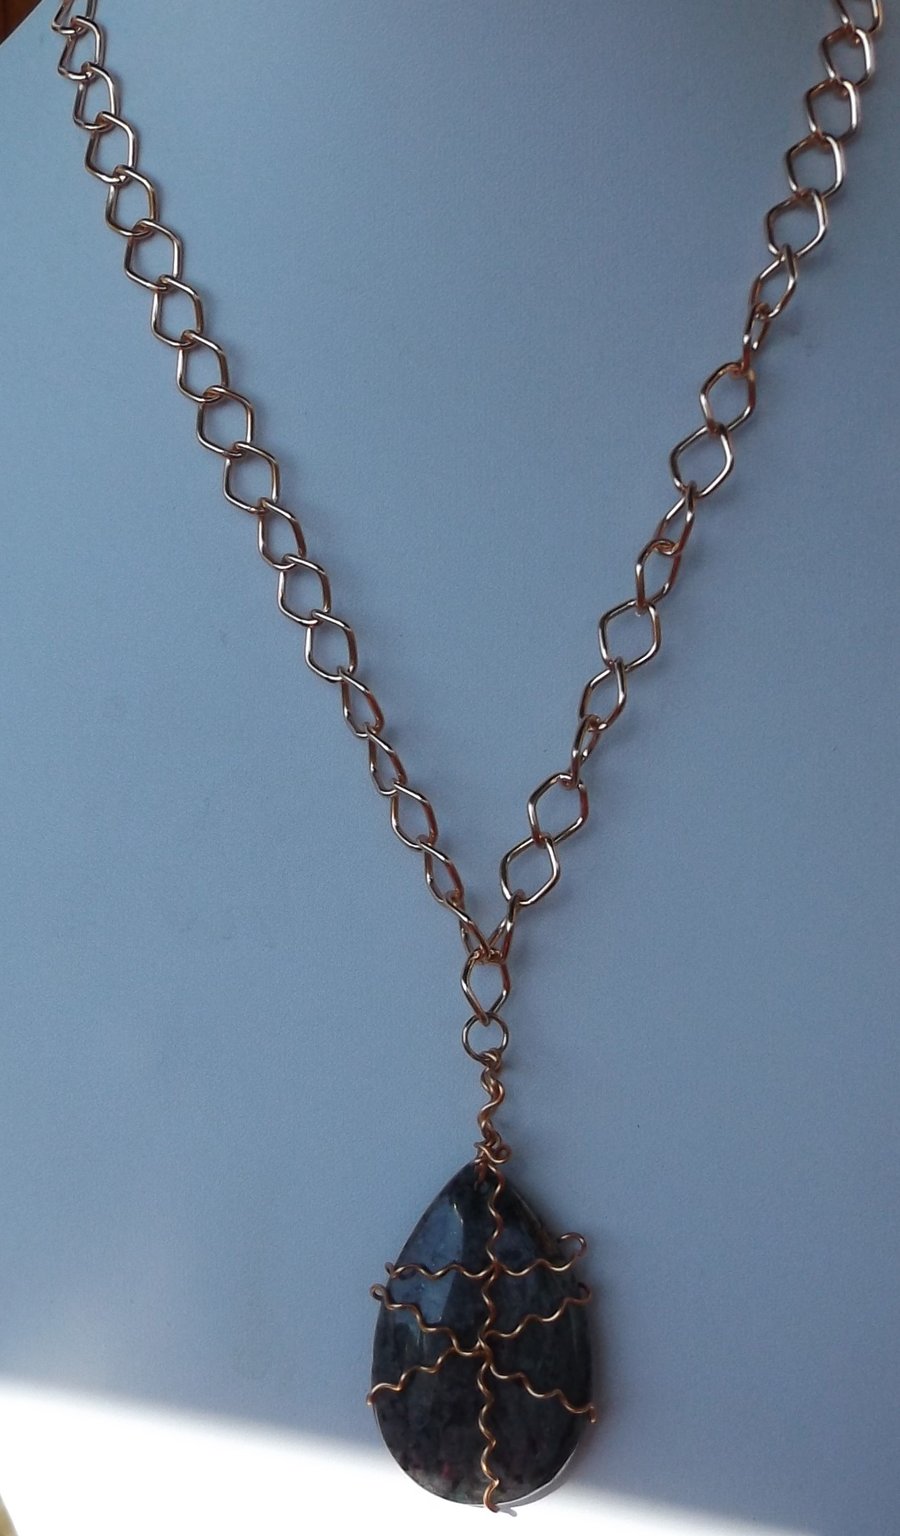 24" Labradorite cabochon in copper wire work necklace